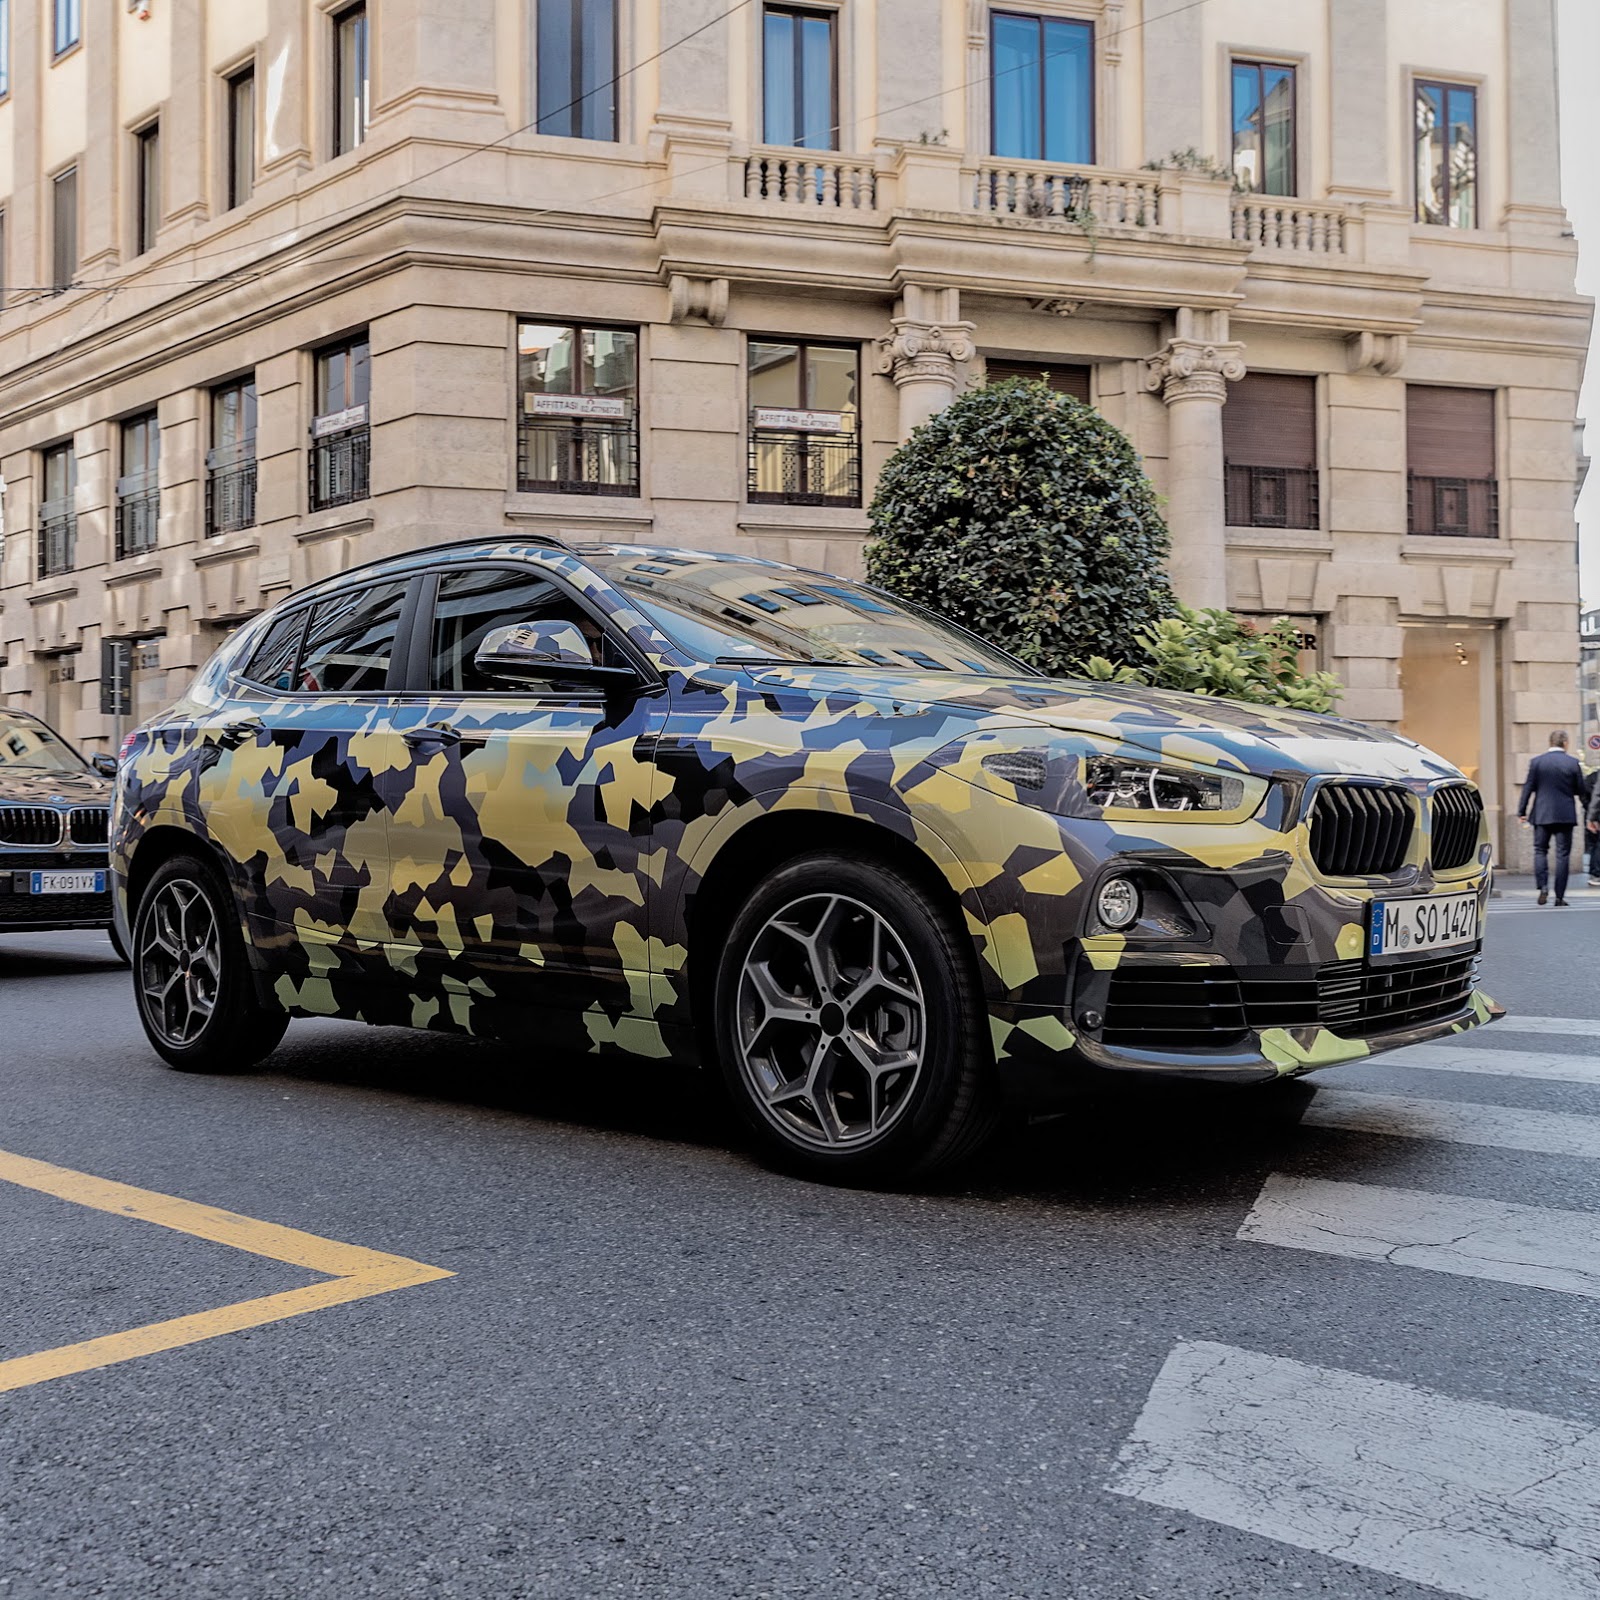 BMW X2 With Digital Camo Goes To Milan For Fashion Week